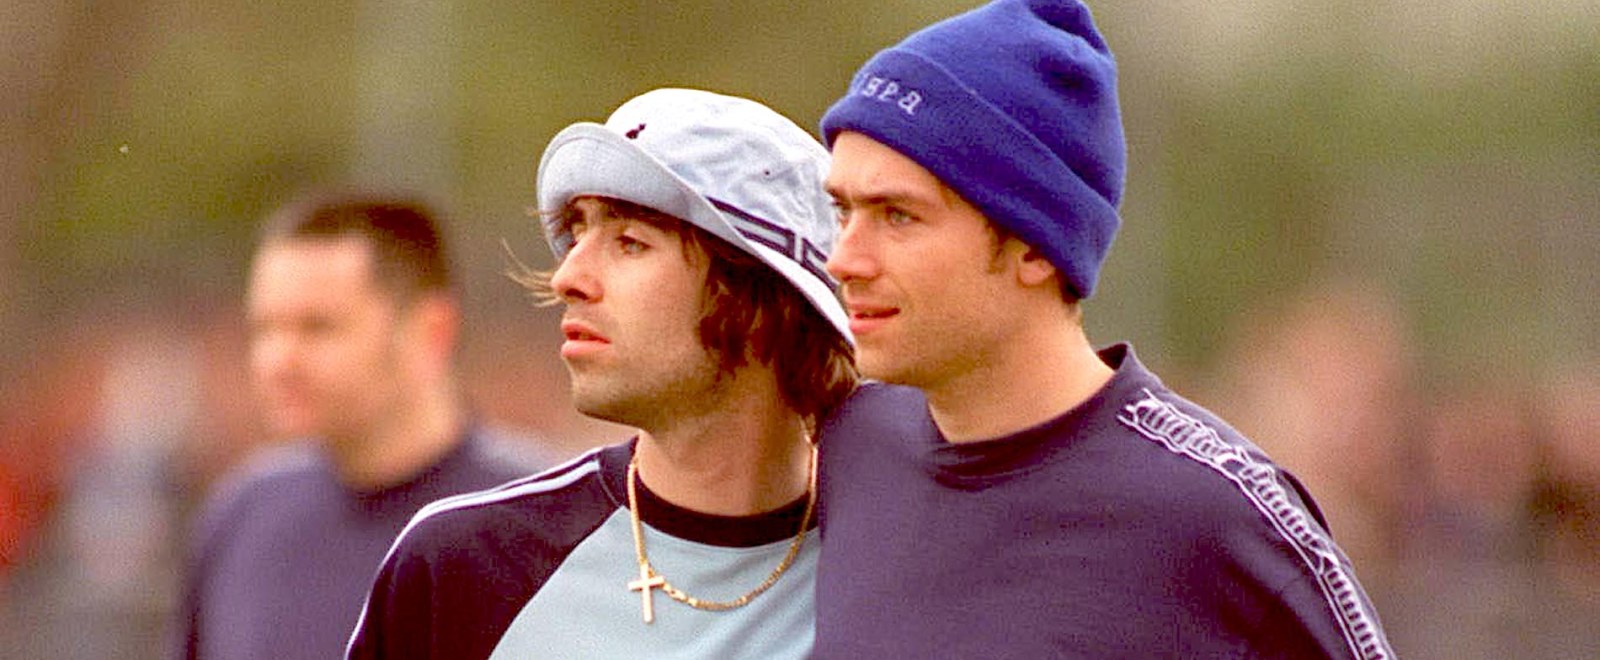 Liam Gallagher Oasis Damon Albarn Blur 1996 Soccer Football